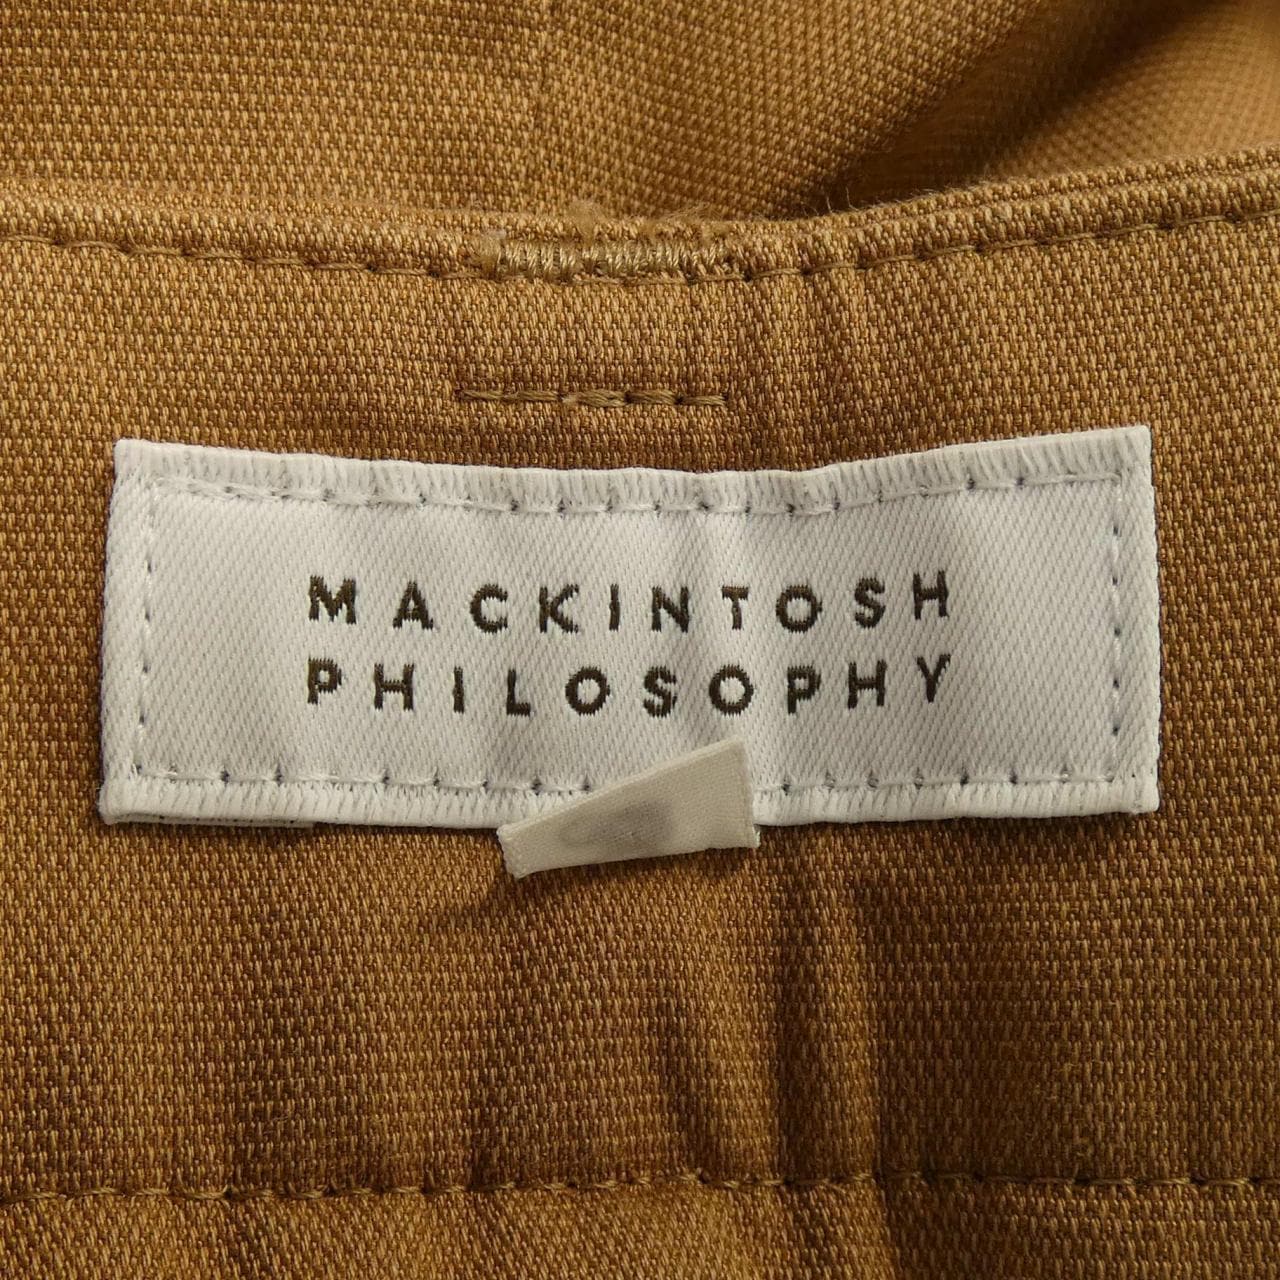 Macintosh philosophy MACKINTOSH PHILOSOPH pants